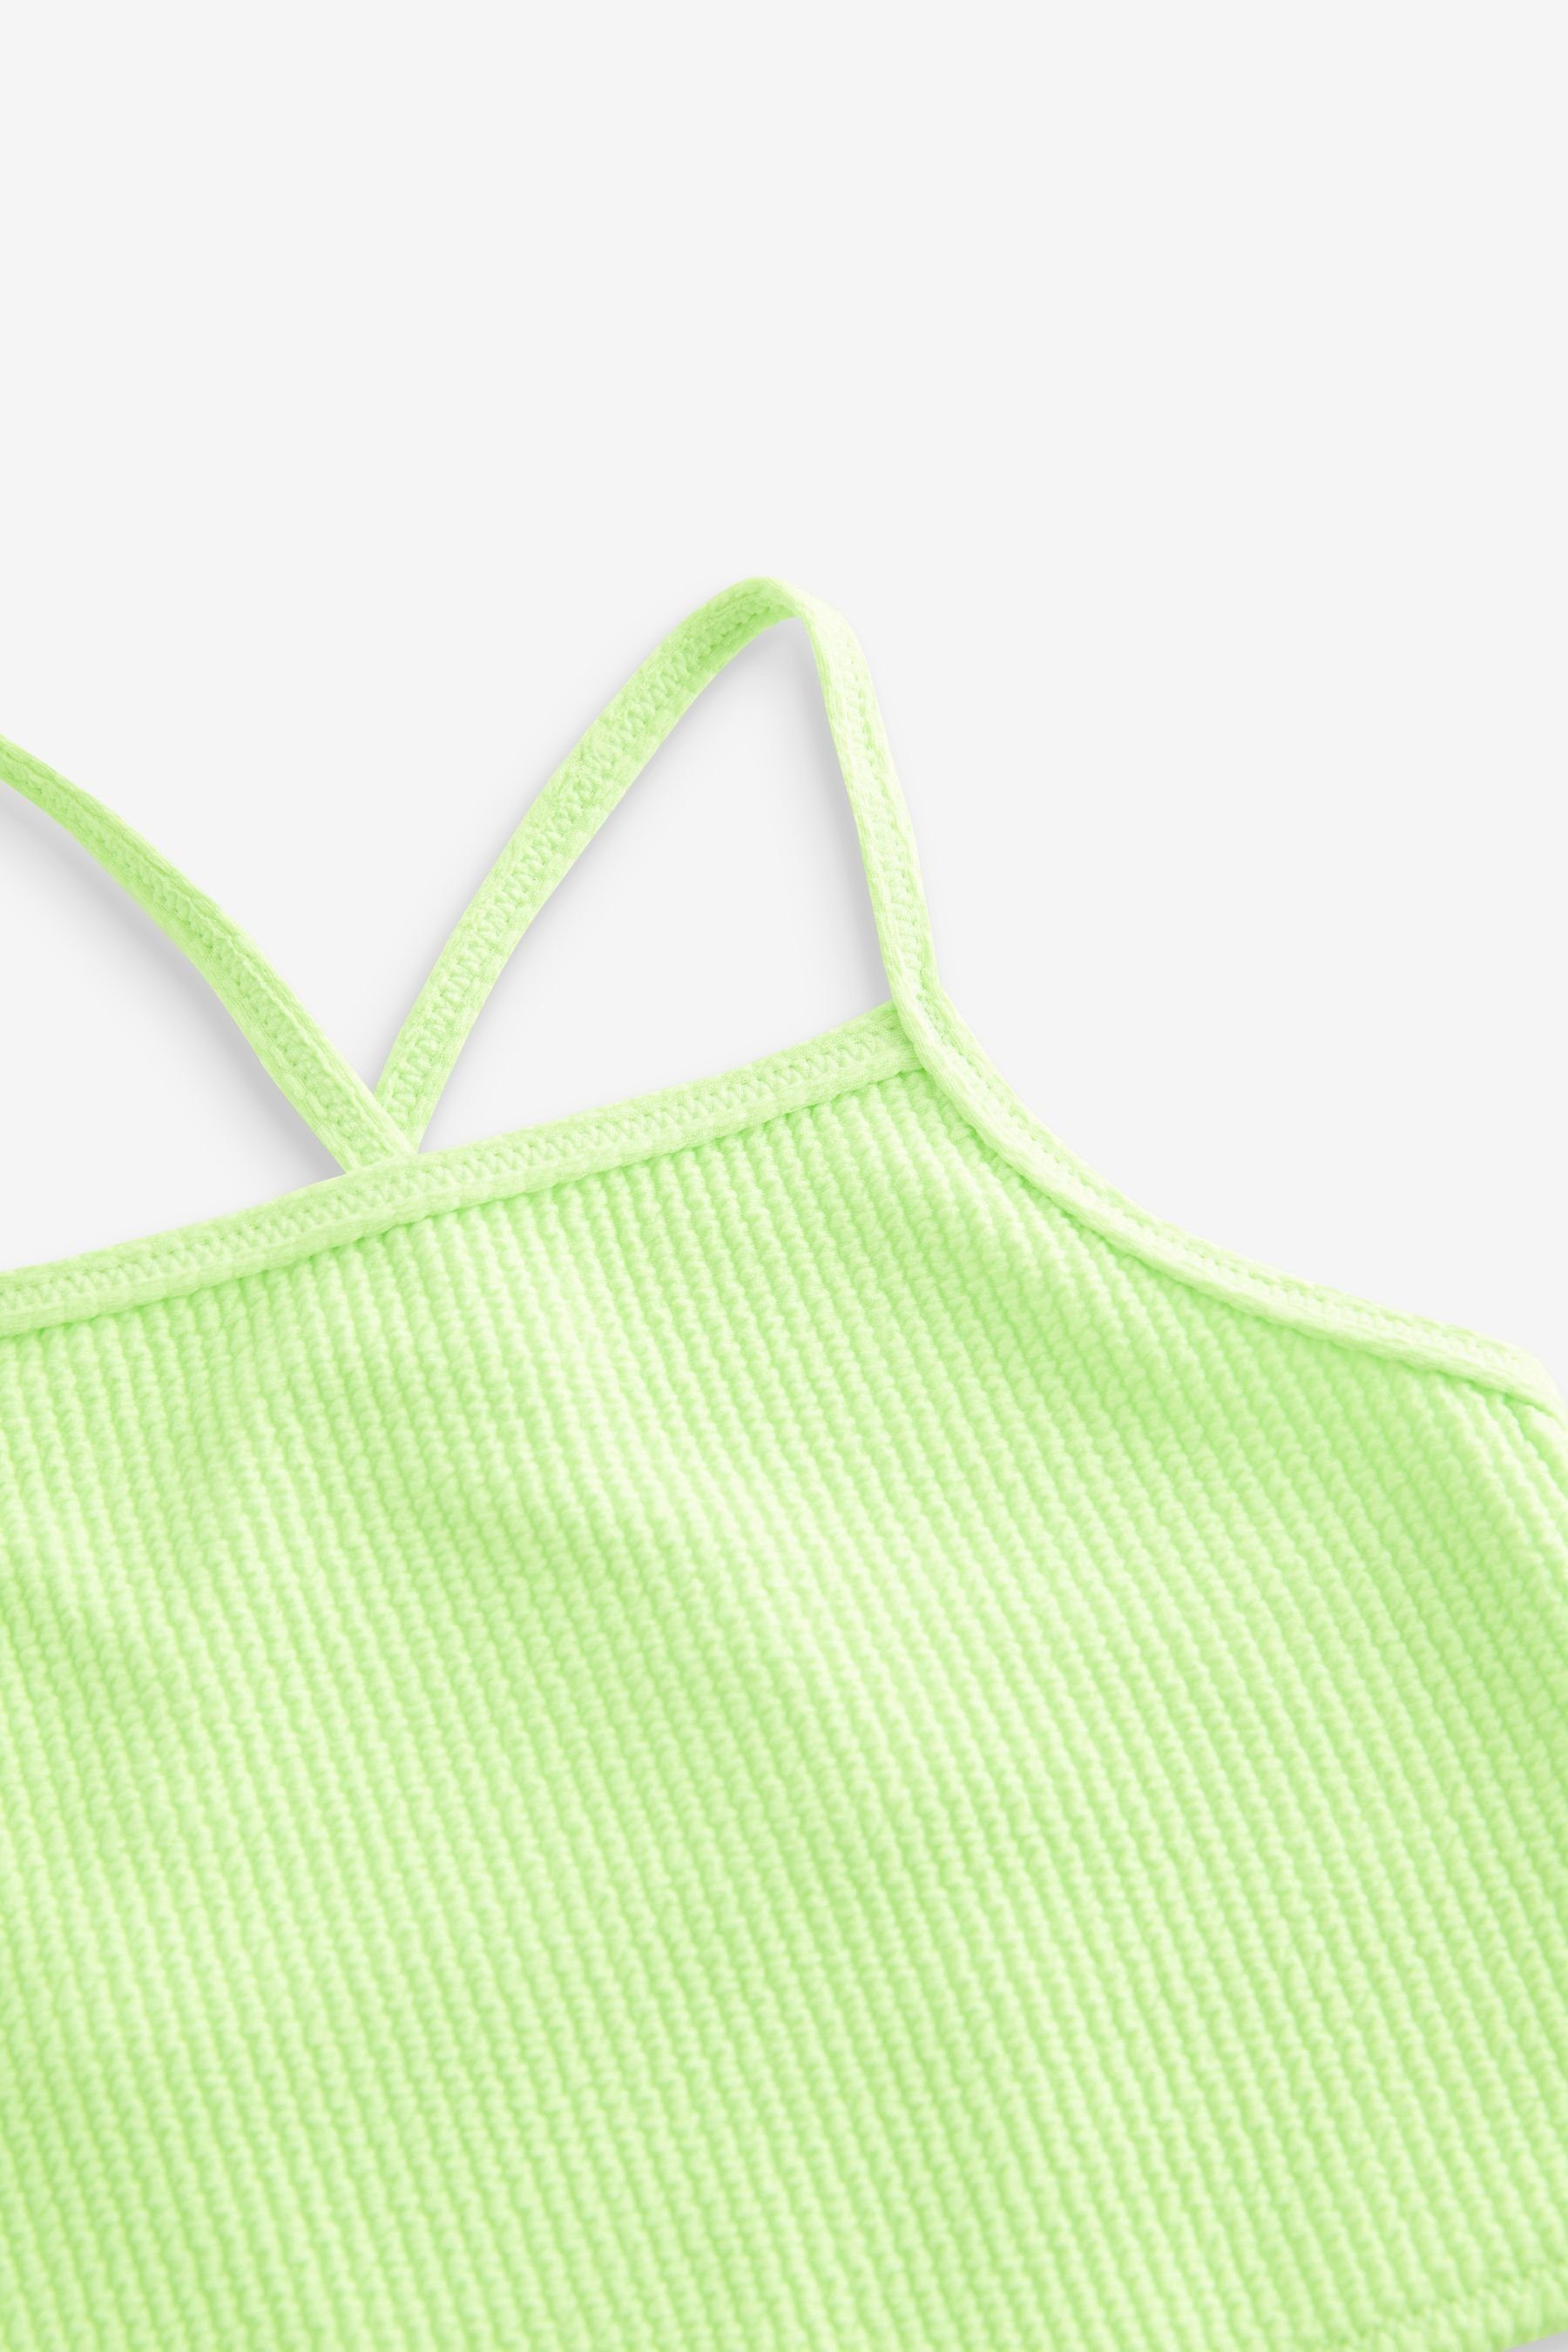 Next Bustier-Bikini Green Lime (2-St) Bikini